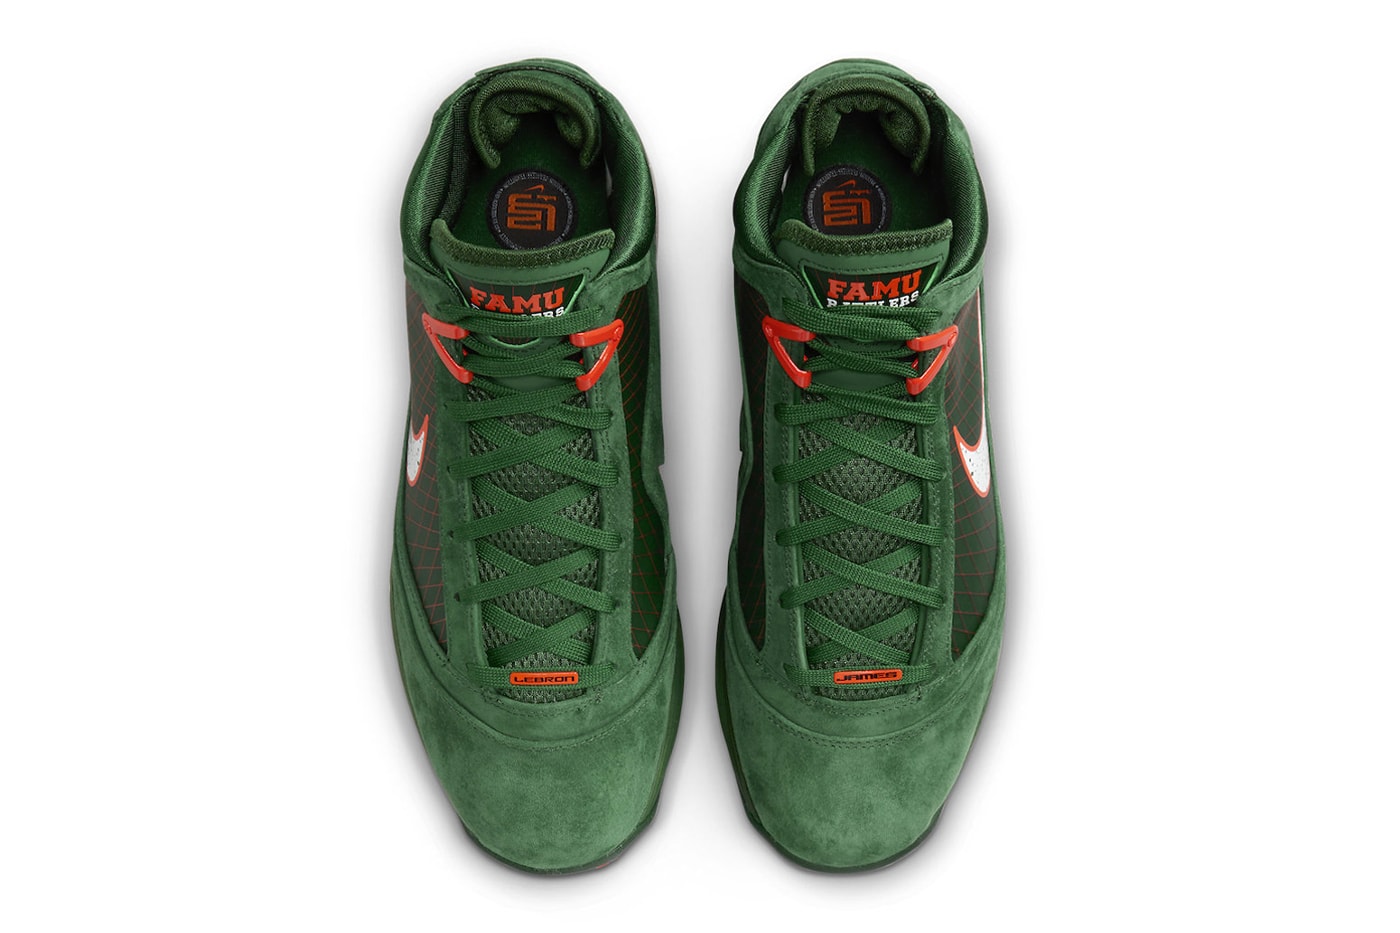 Nike Lebron 7 Florida AM gorge green team orange white DX8554 300 release info date price 200 USD FAMU 